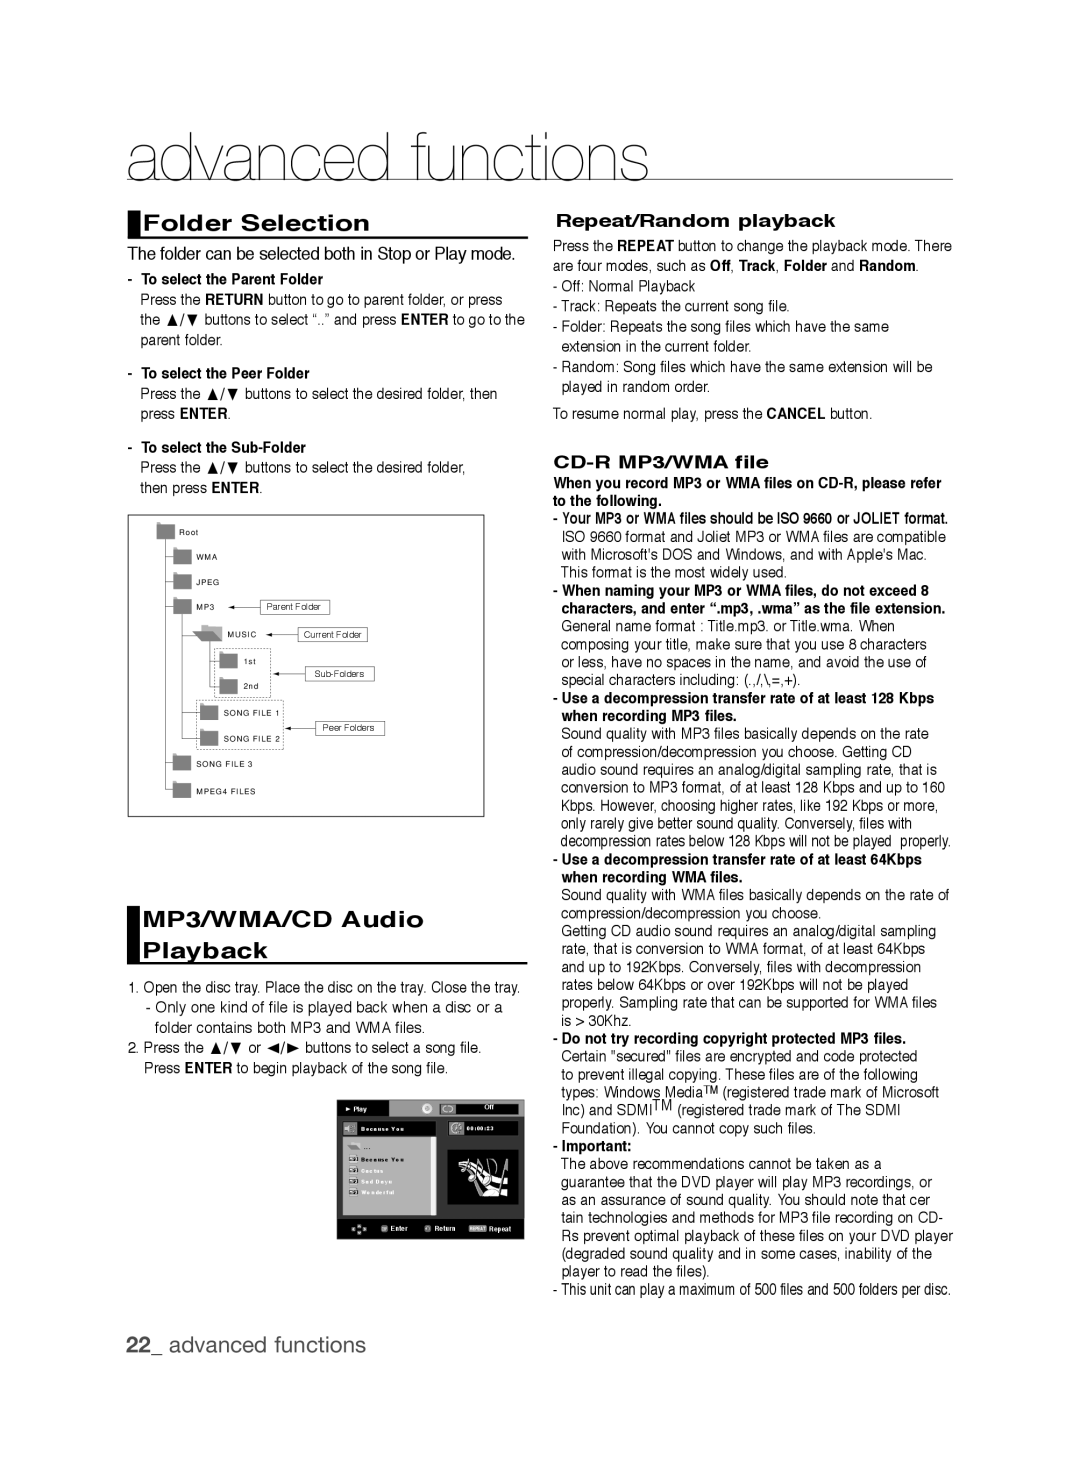 Samsung DVD-1080P9/XEL manual Folder Selection, MP3/WMA/CD Audio Playback, advanced functions, Repeat/Random playback 